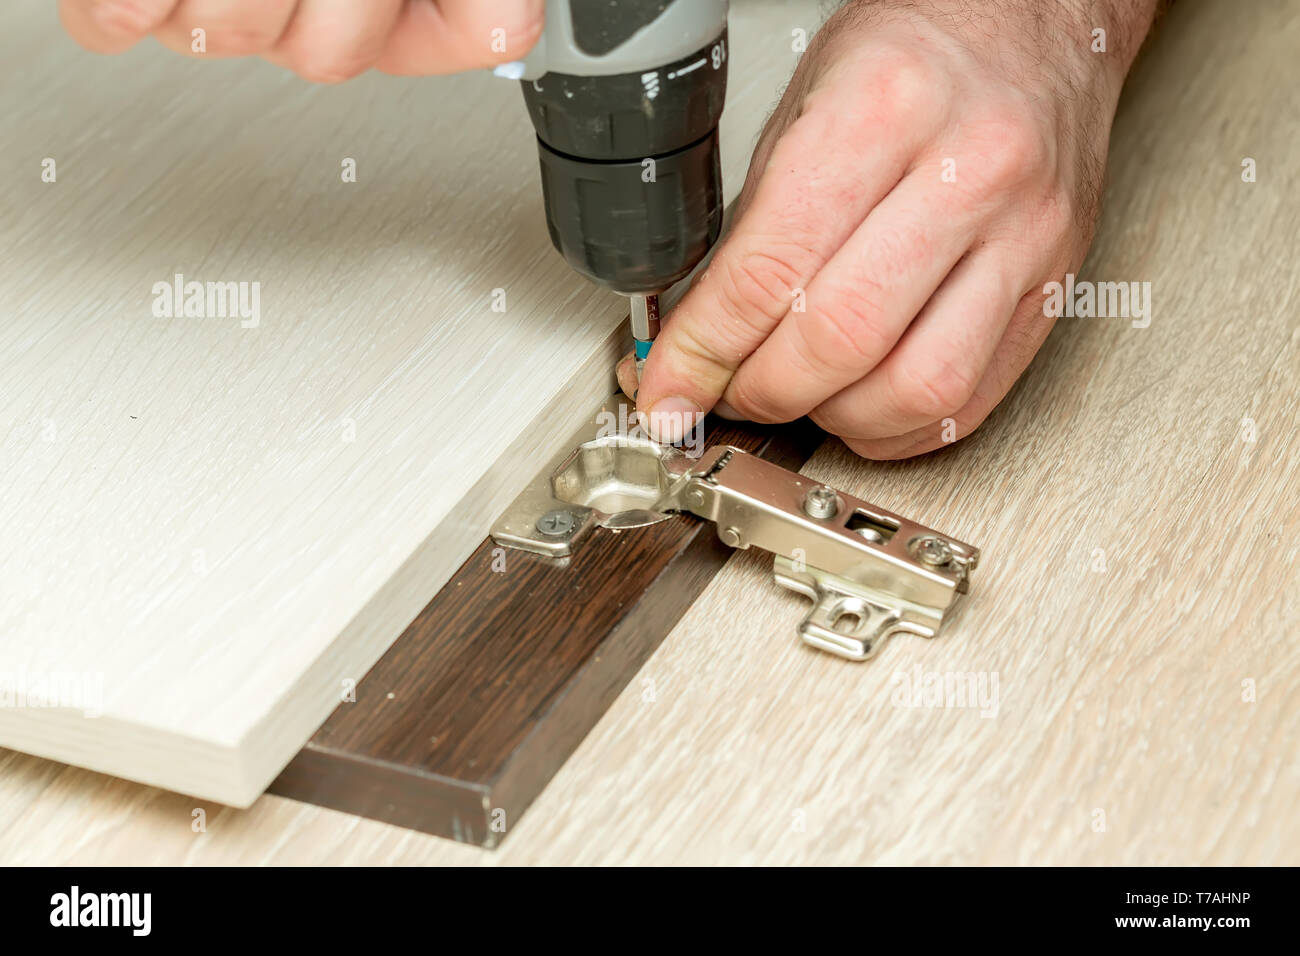 Fixing door furniture hinges. Fixing furniture hinges Stock Photo